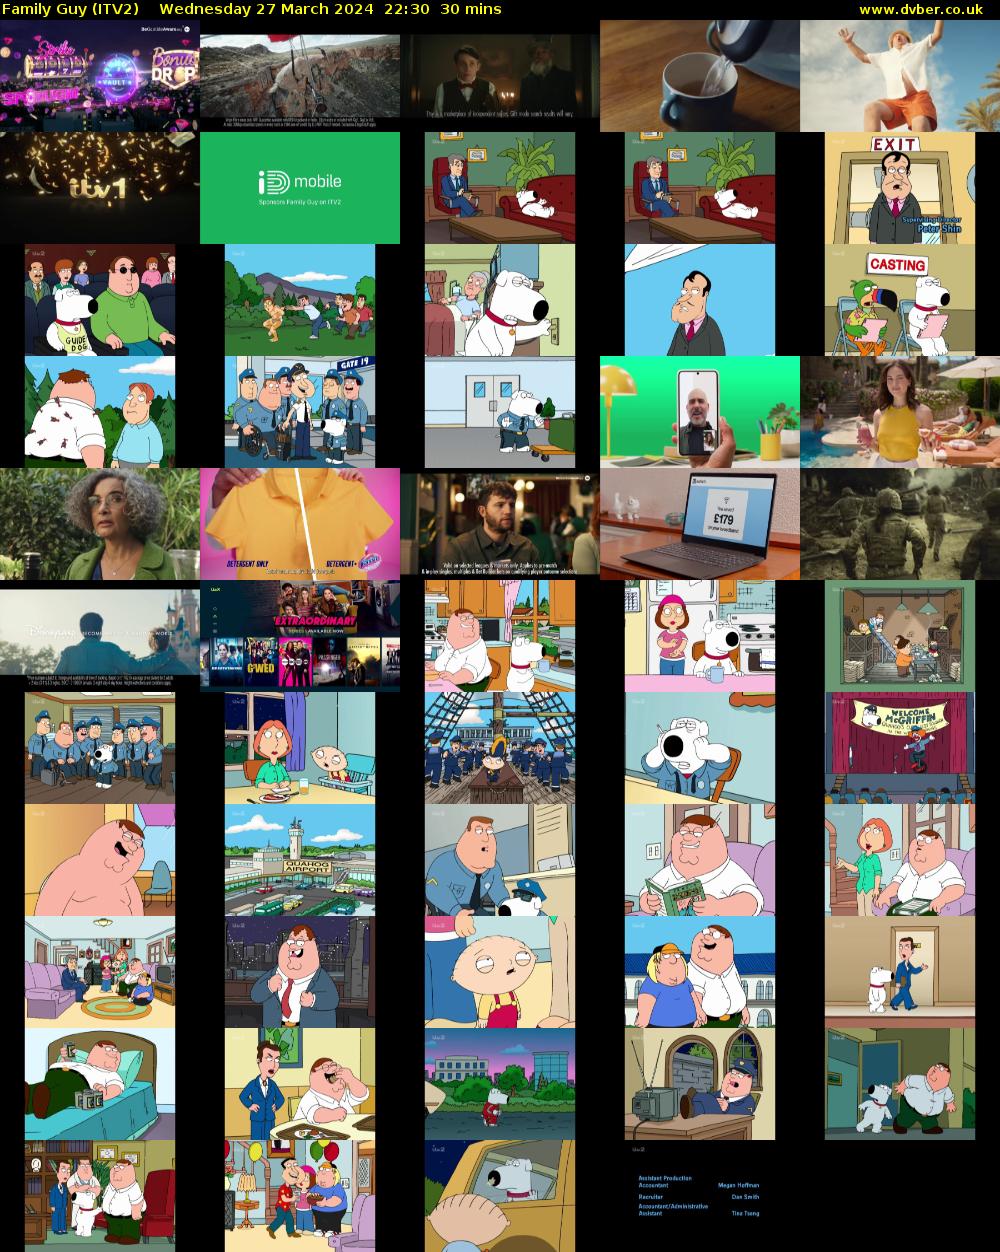 Family Guy (ITV2) Wednesday 27 March 2024 22:30 - 23:00